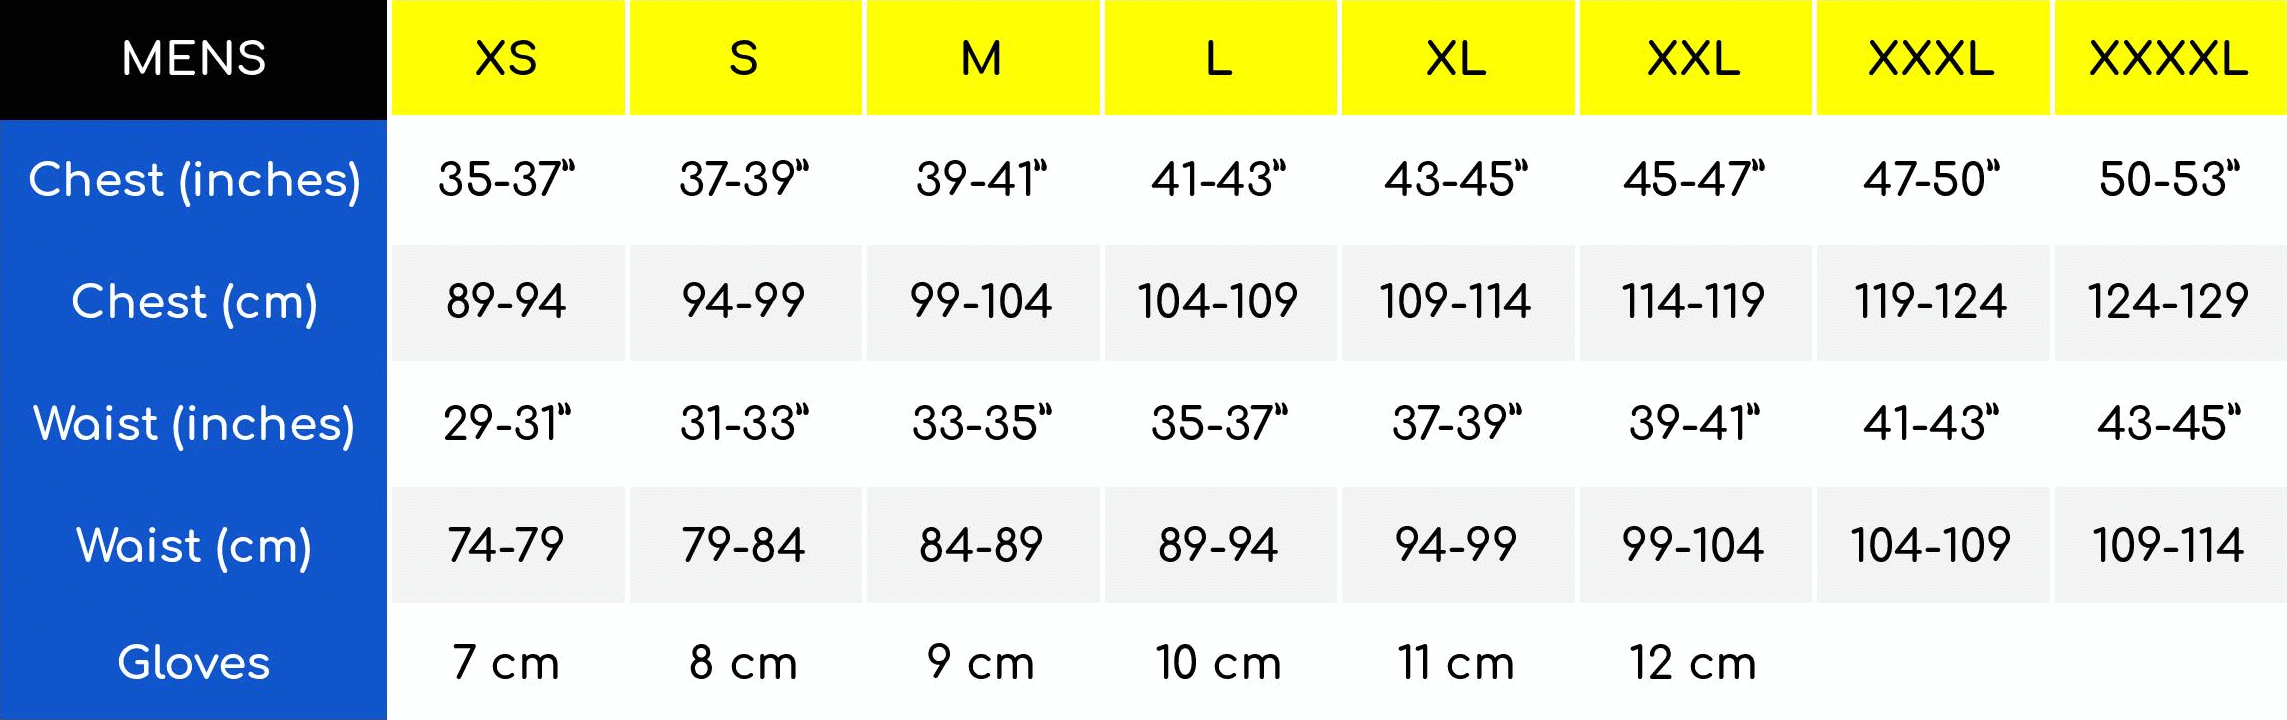 Endura Mens Size Chart